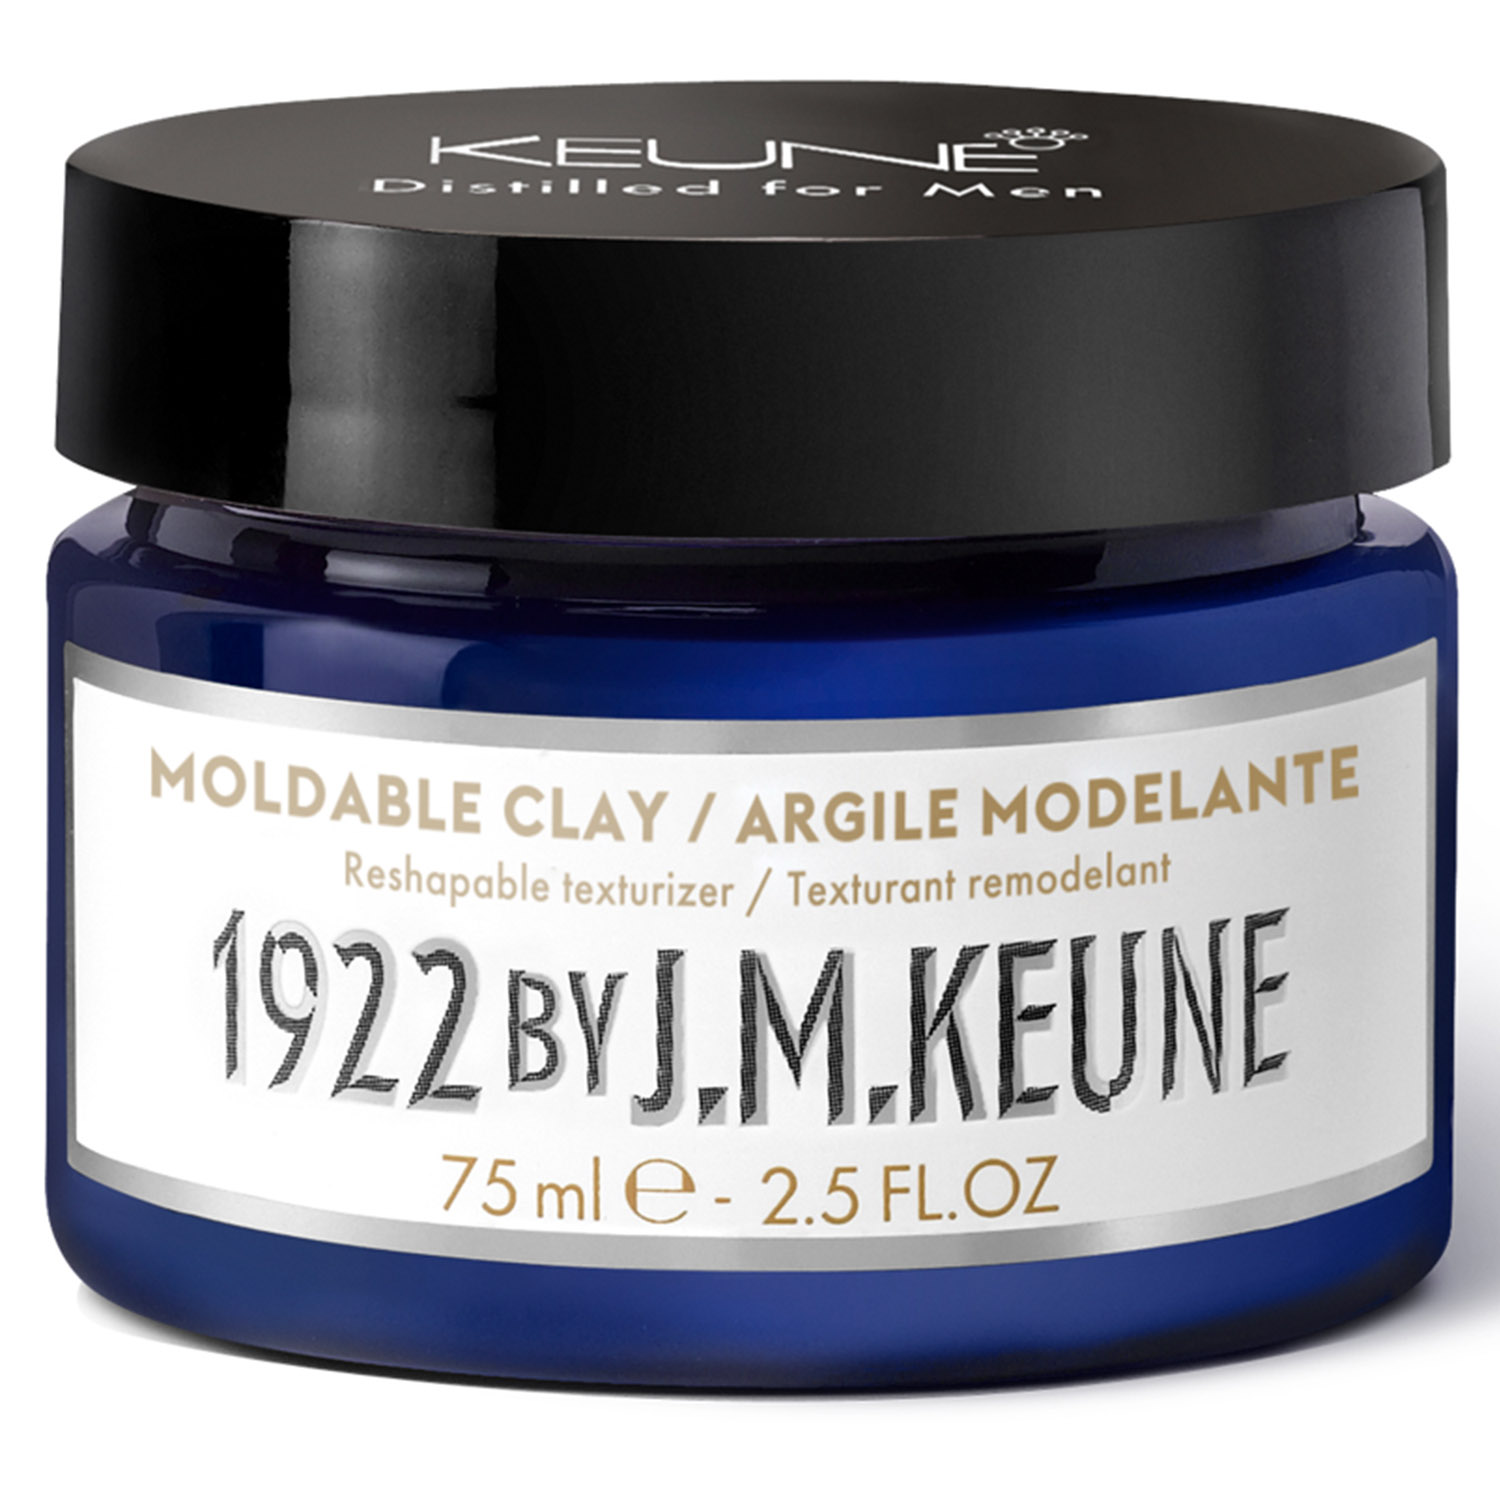 Keune Моделирующая глина для укладки волос Moldable Clay, 75 мл (Keune, 1922 by J.M. Keune) keune style sculpting clay 82 глина скульптурирующая 75 мл